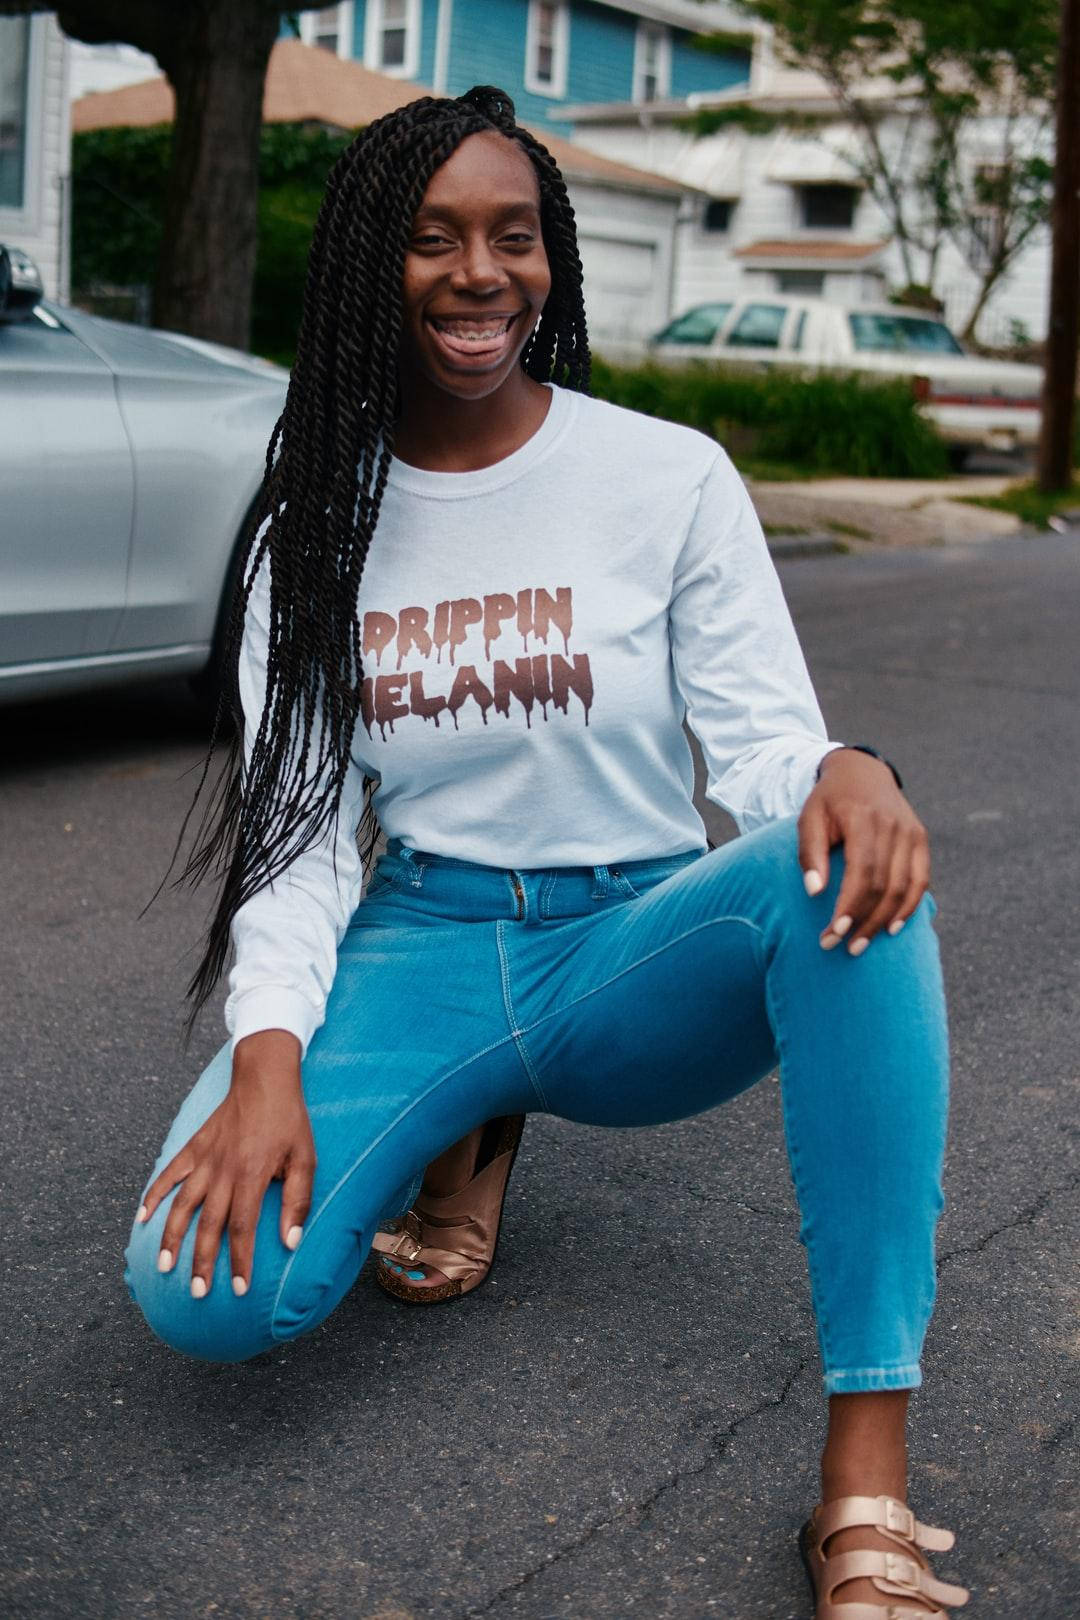 Black Girl Baddie With Drippin' Melanin Shirt Background